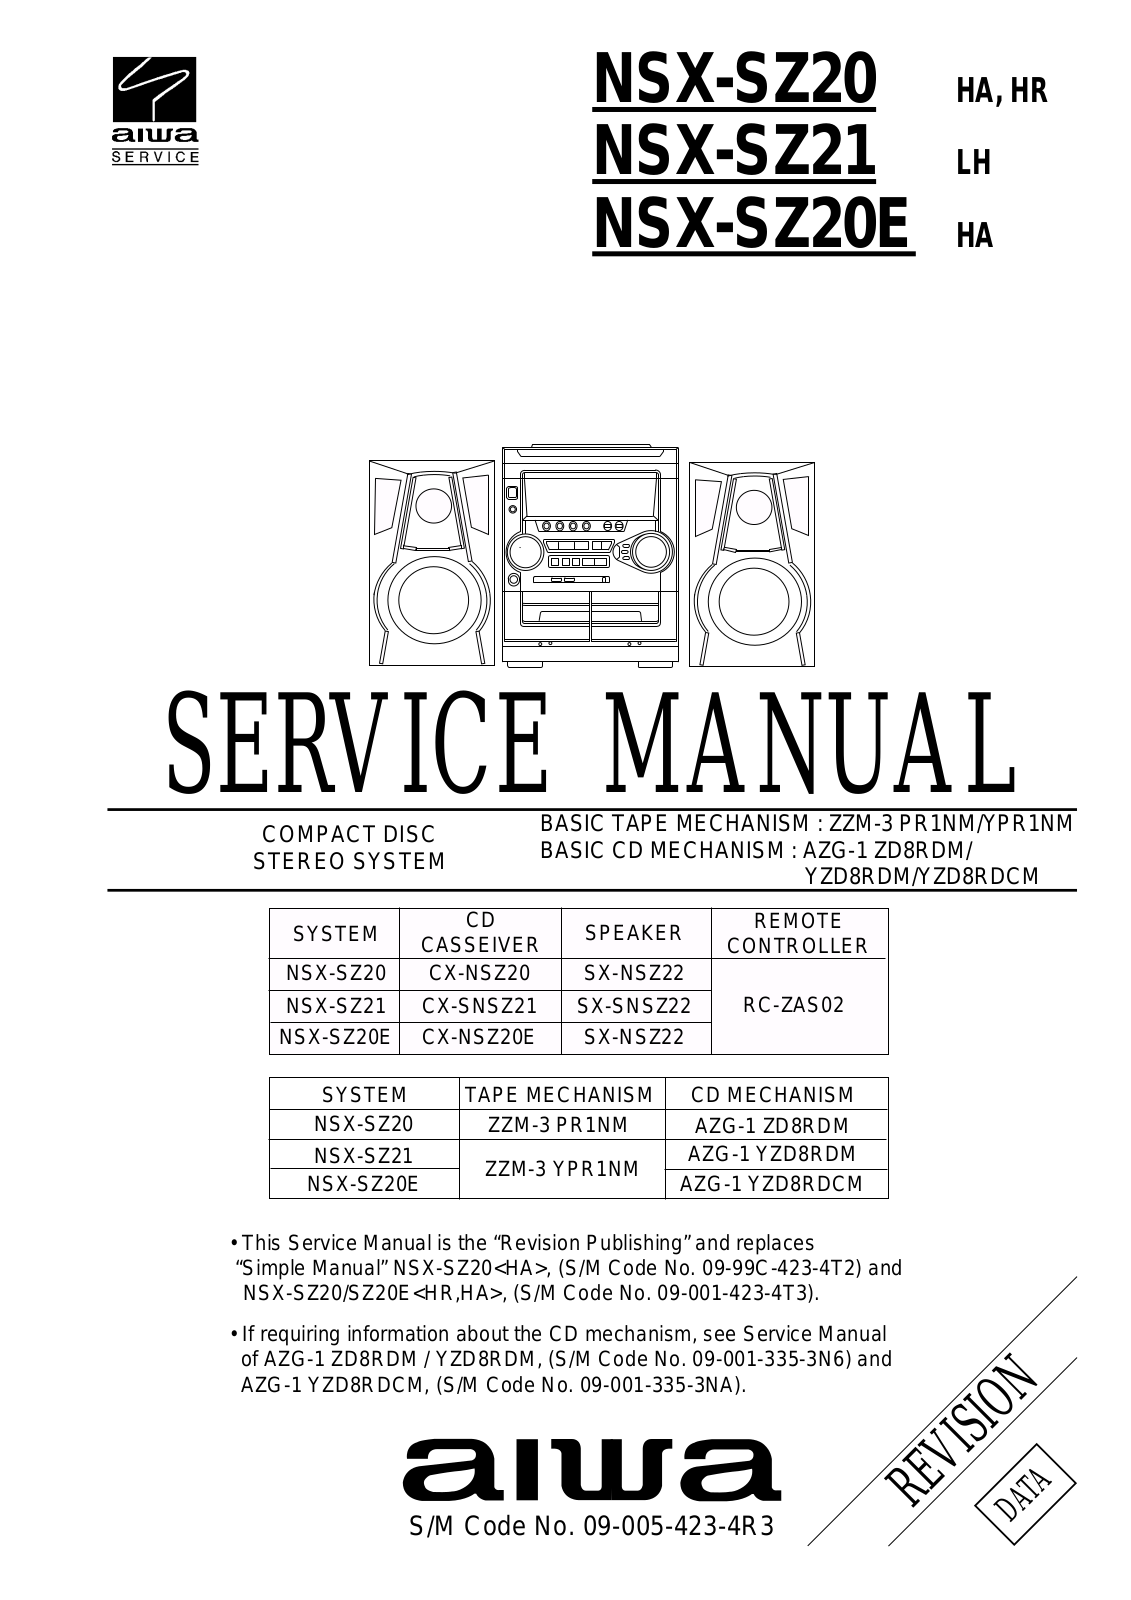 Aiwa NSX-SZ20E HA, NSX-SZ21 LH, NSX-SZ20 HA, NSX-SZ20 HR Service Manual